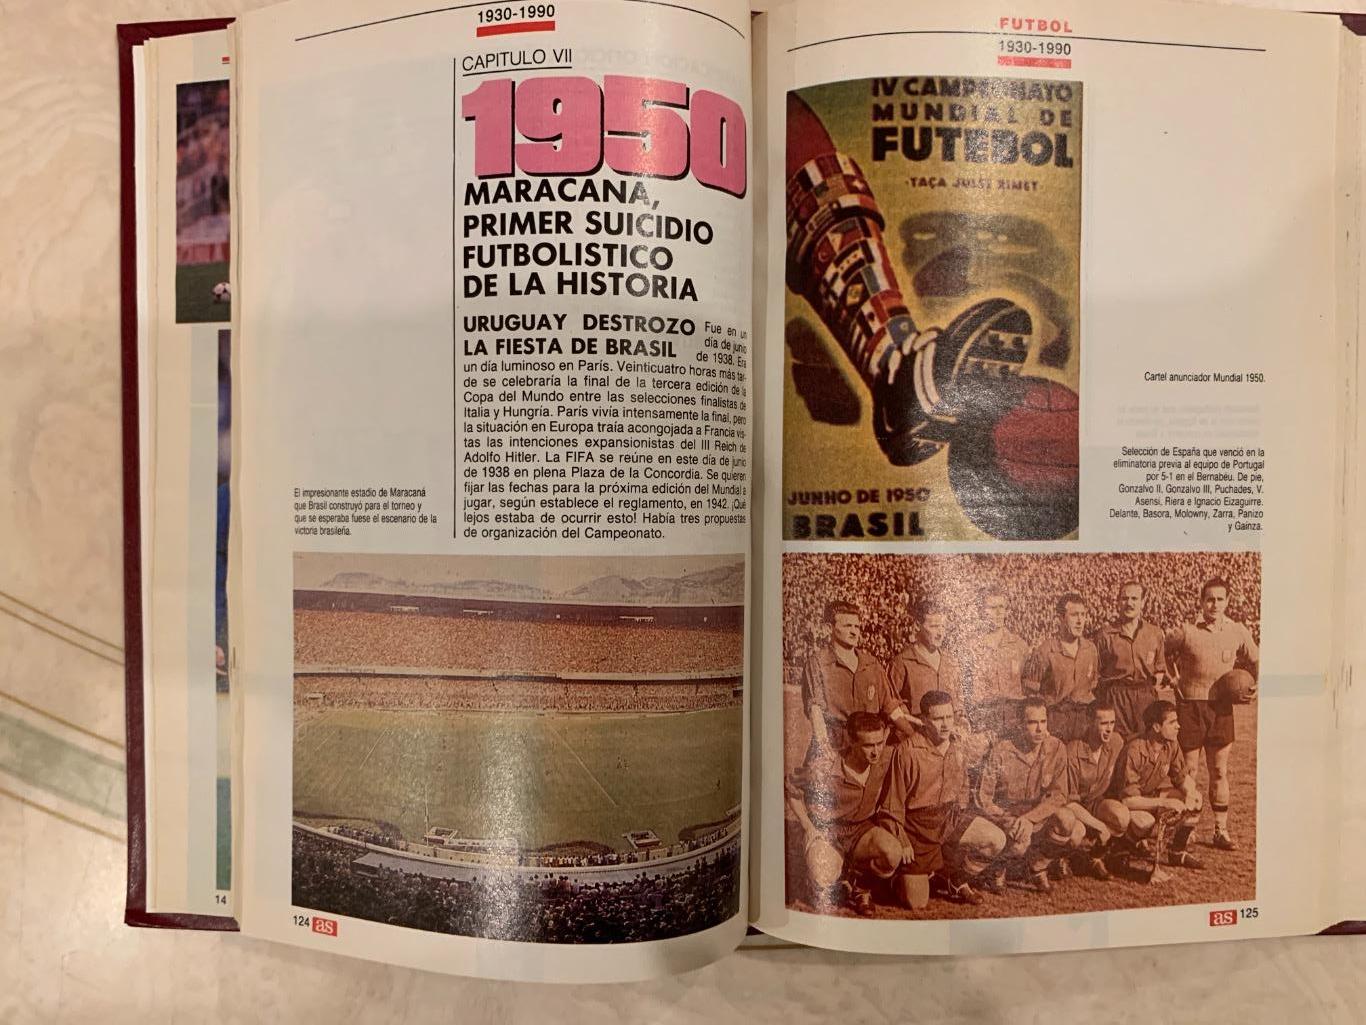 As color история чемпионата мира 1930-1974 5